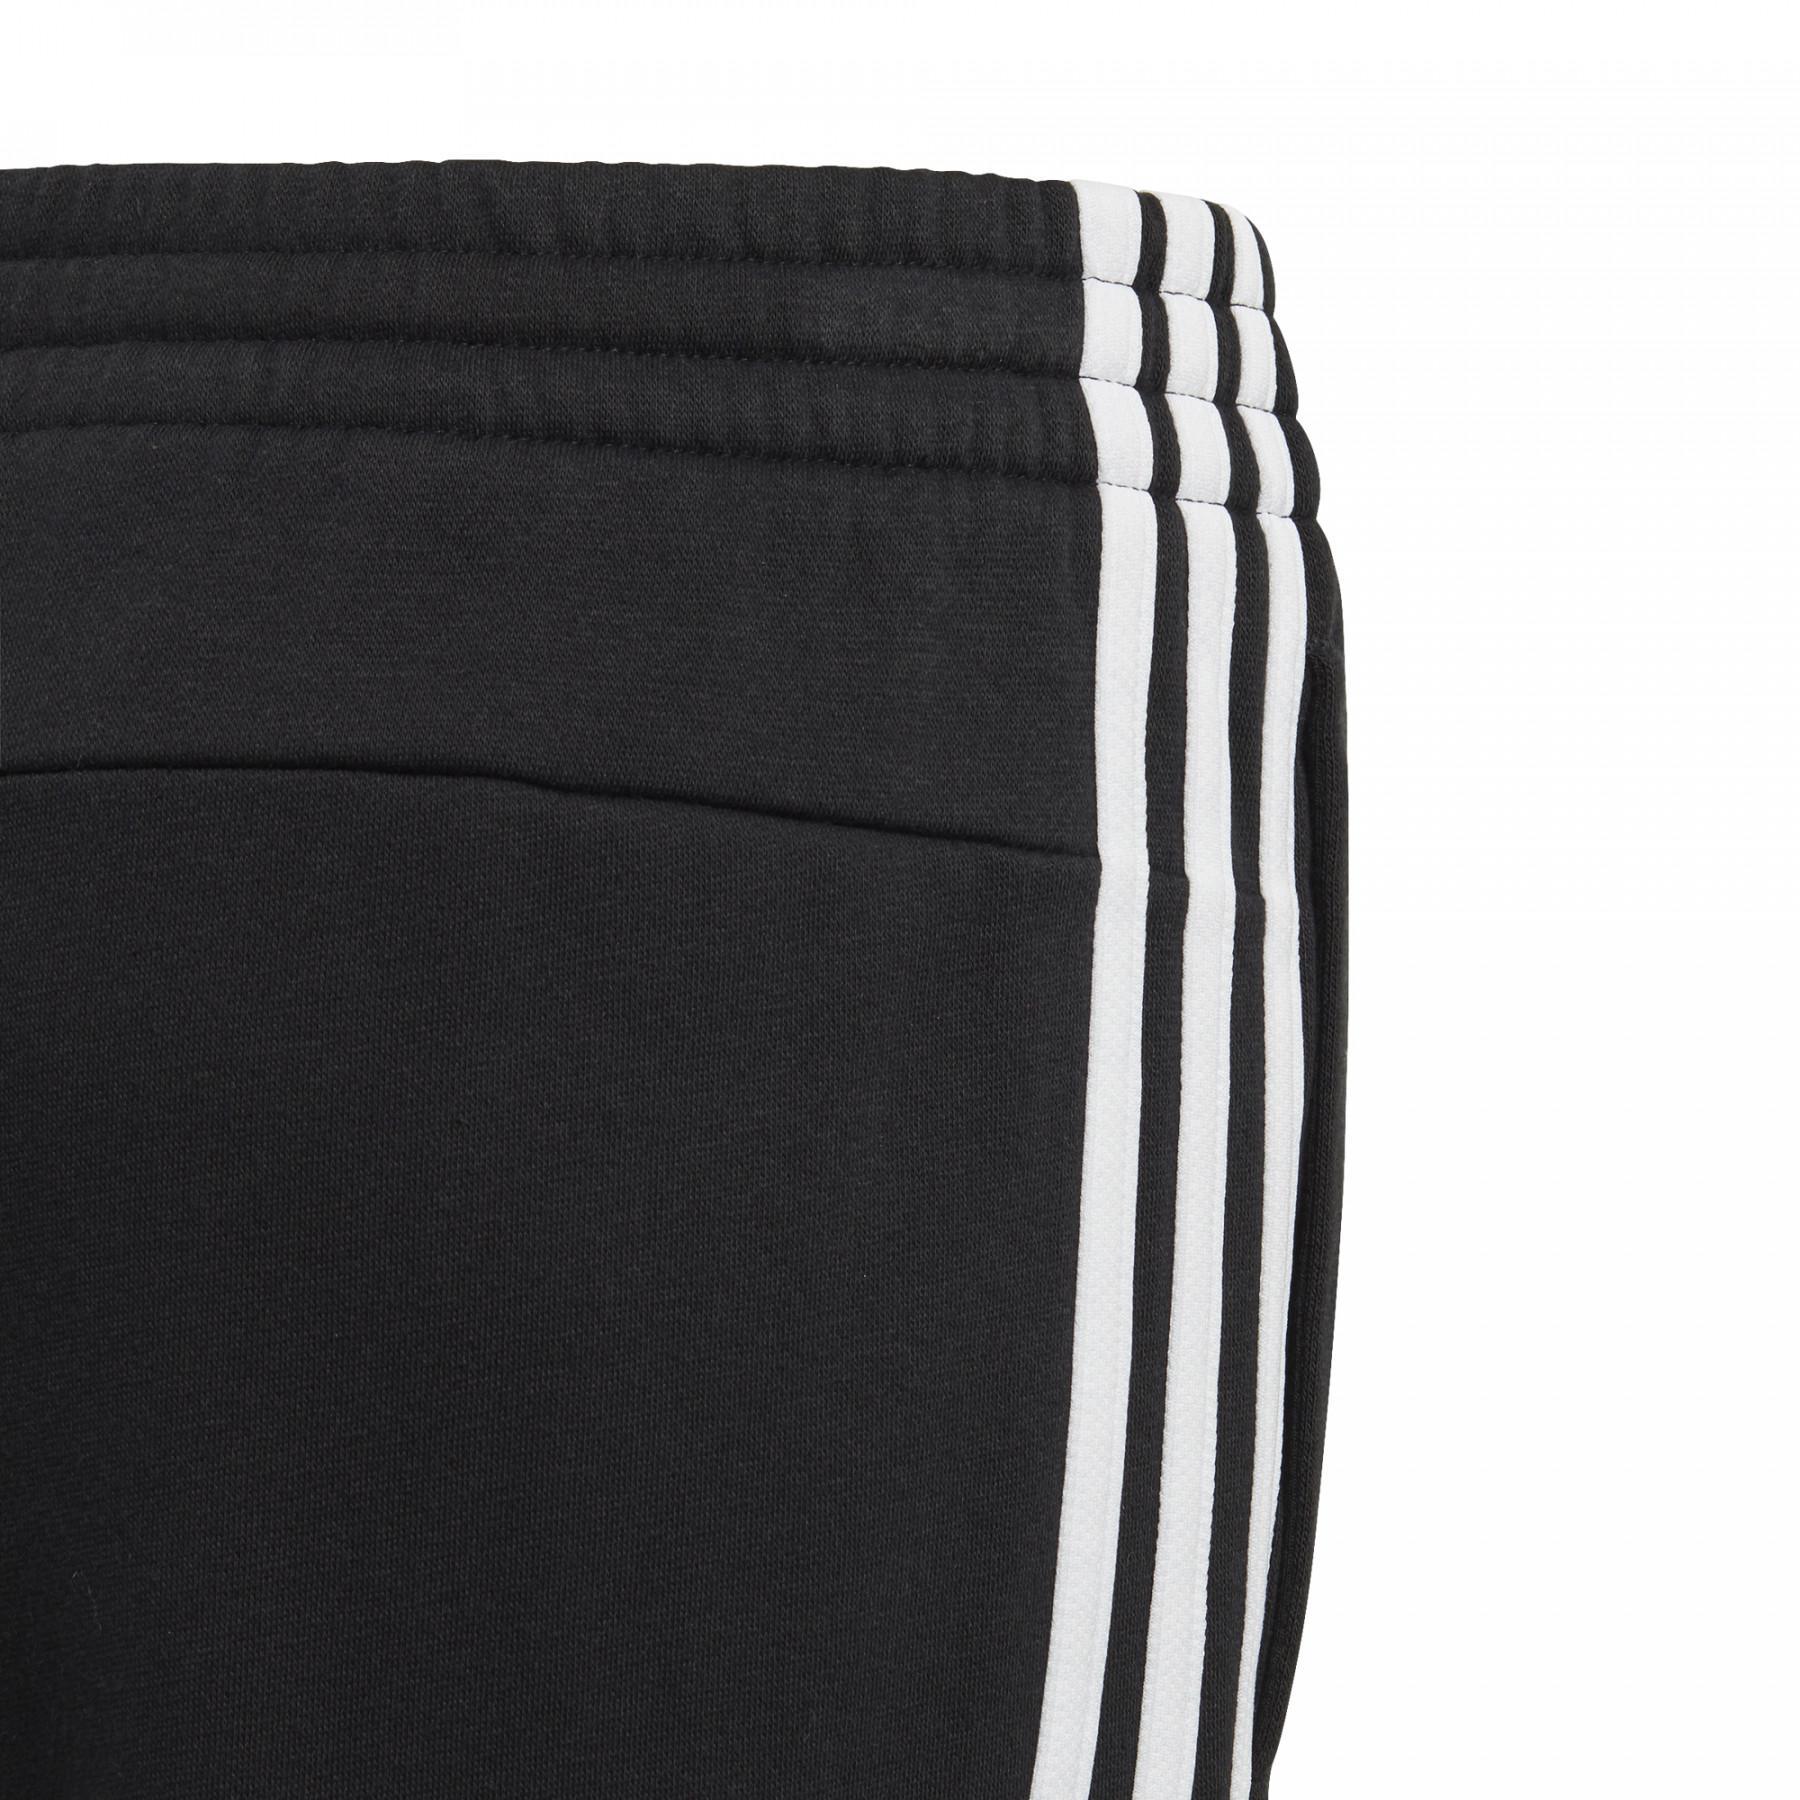 Women's trousers child adidas 3-Stripes